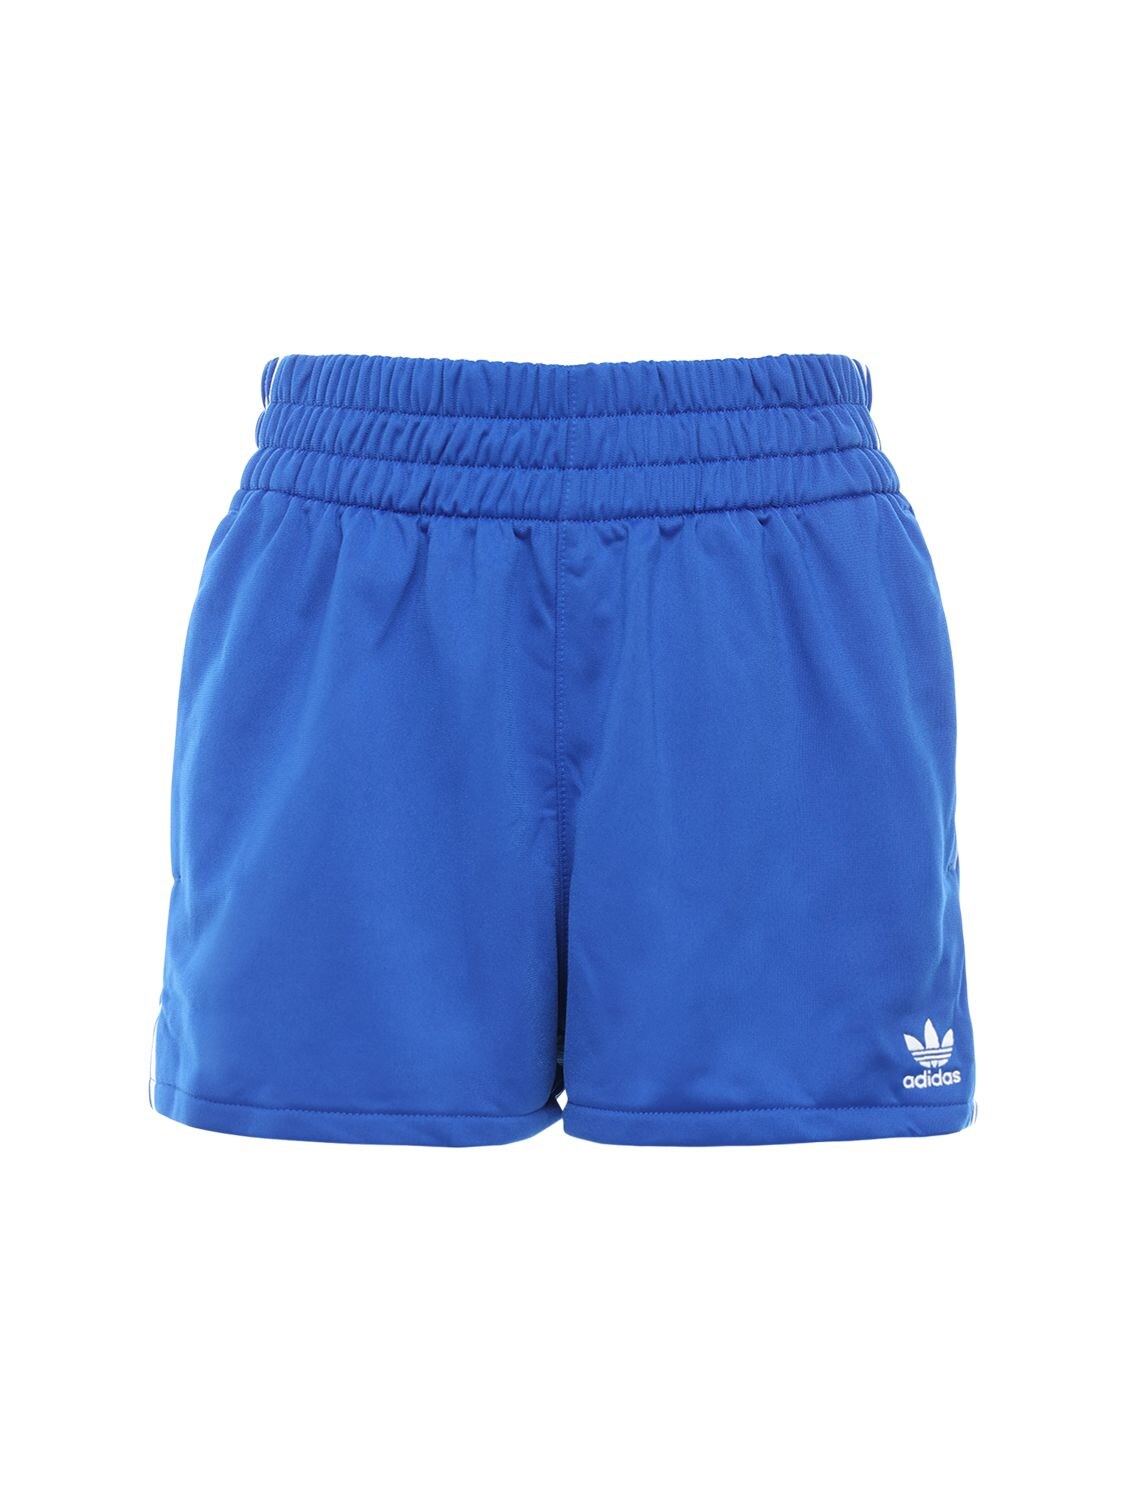 Adidas Originals 3 Stripes Sweat Shorts In Team Royal